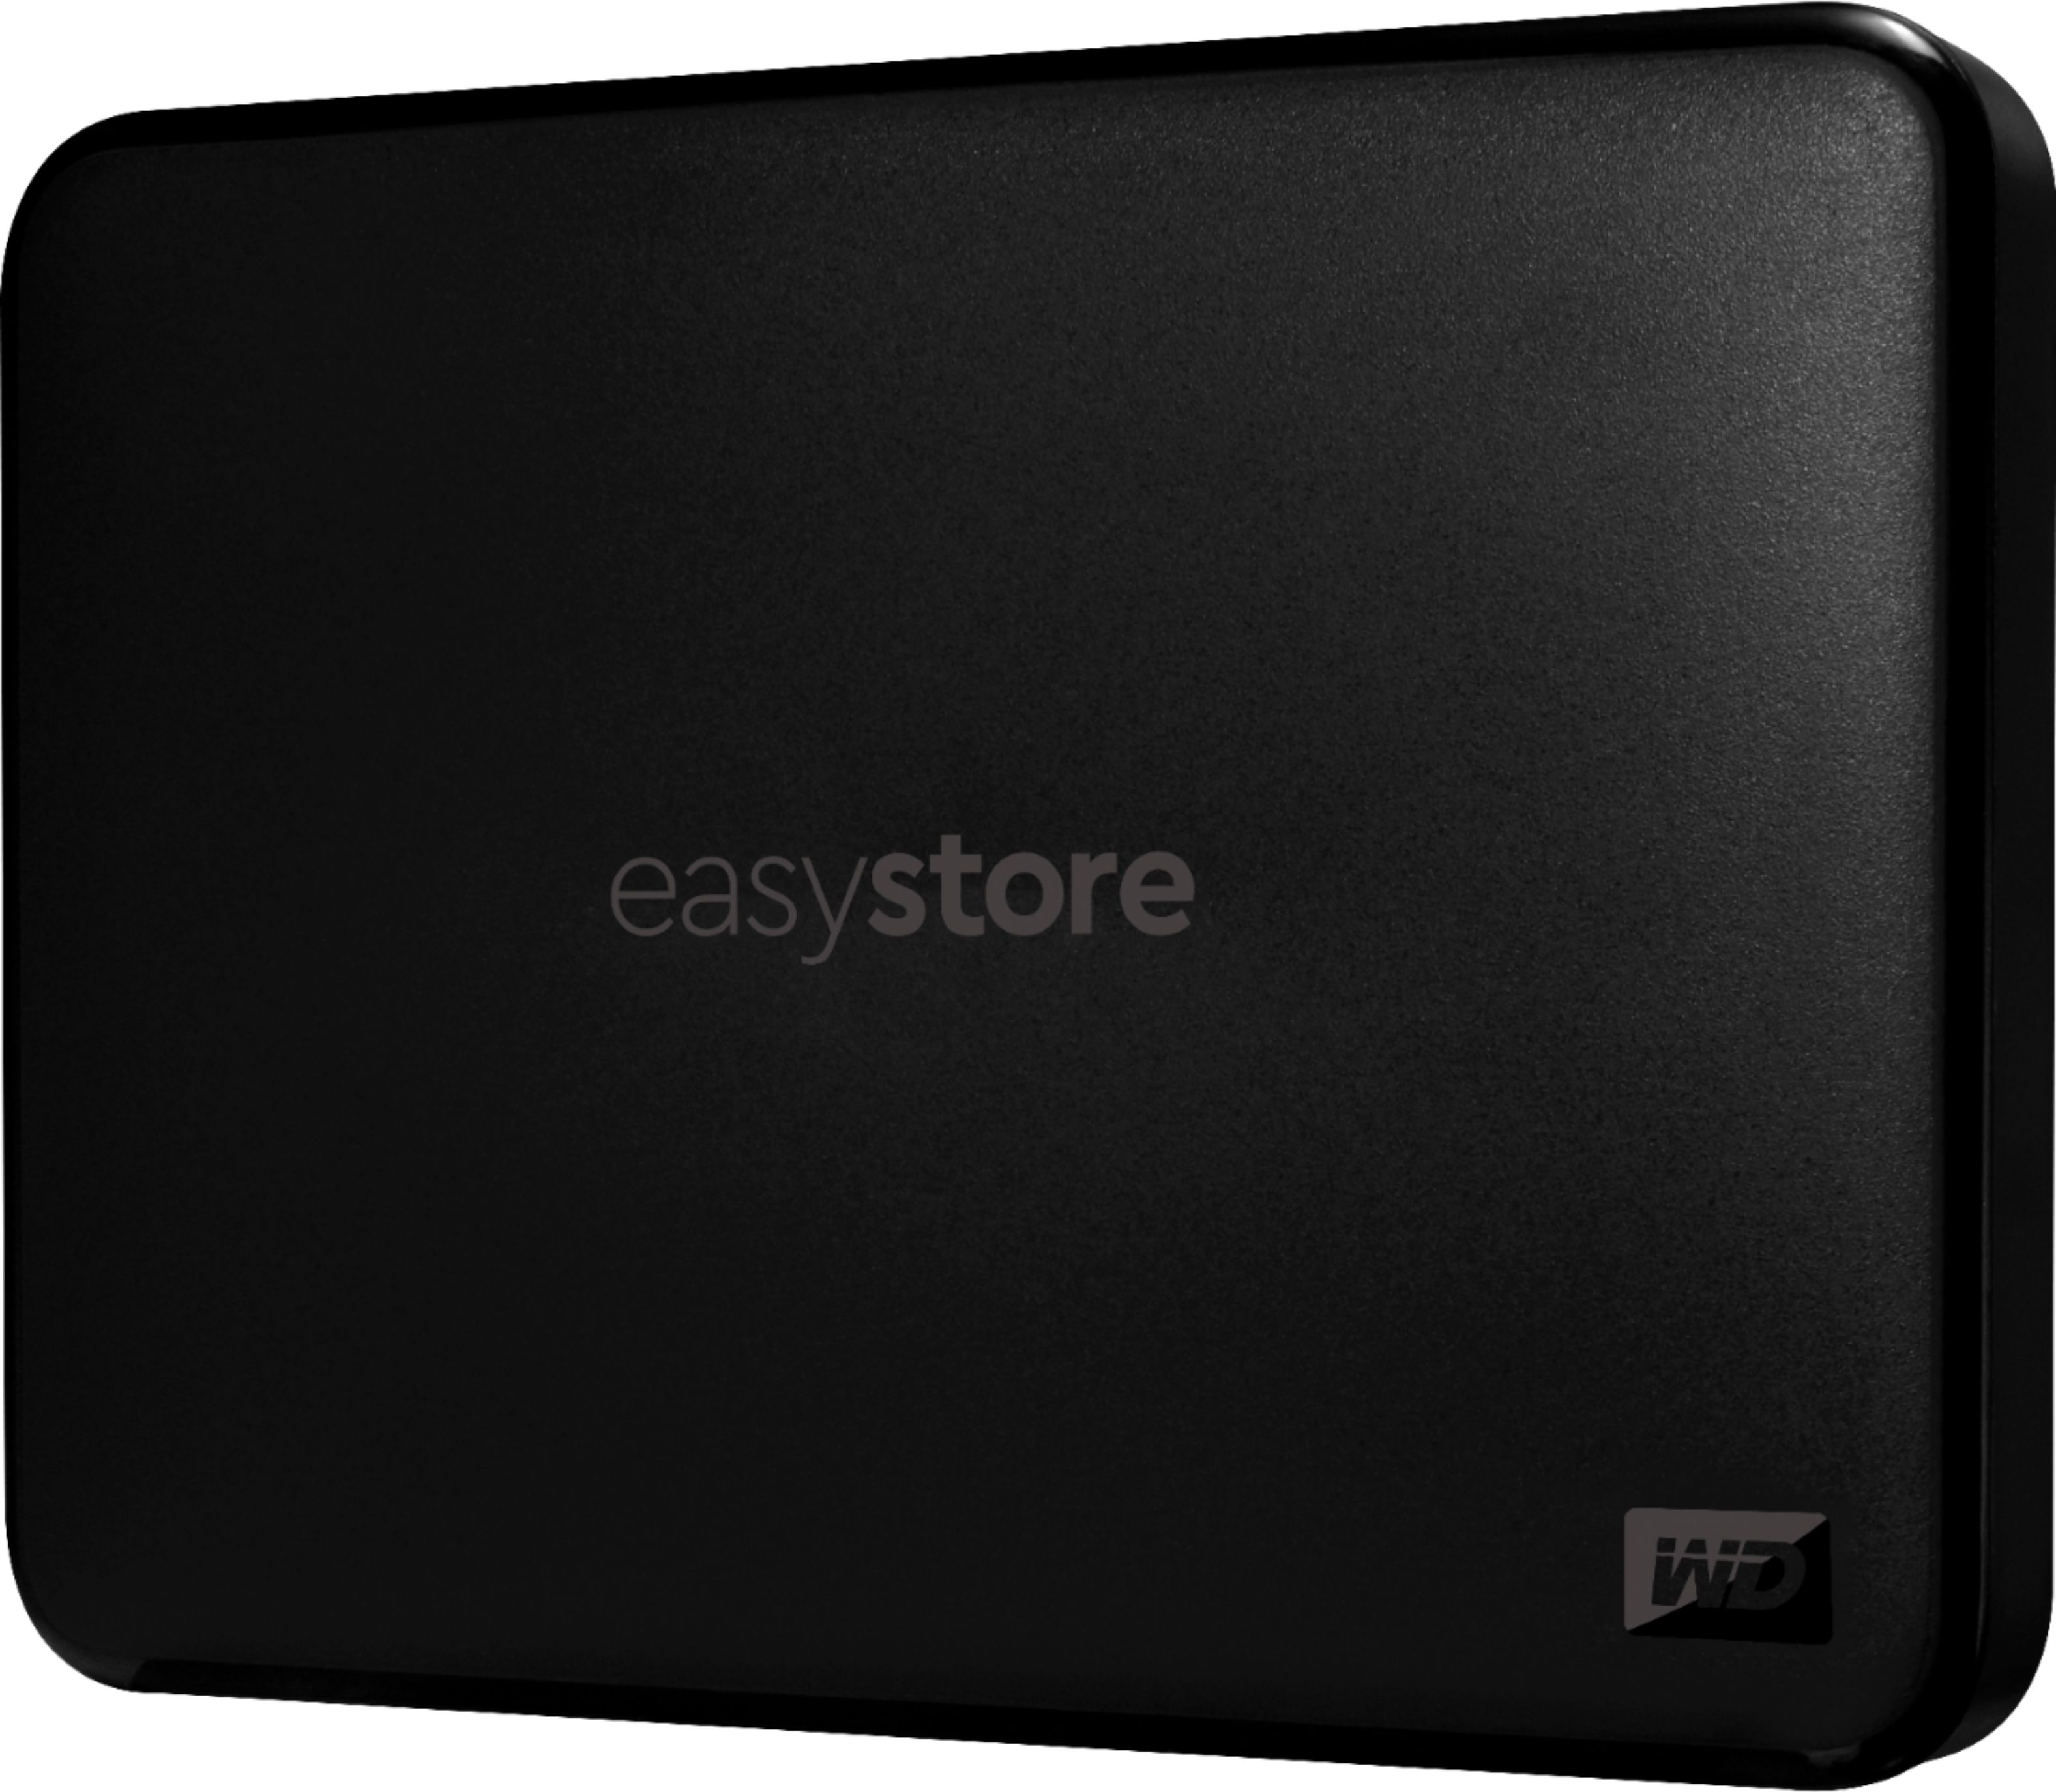 WD Easystore 2TB External USB 3.0 Portable Hard Drive Black WDBAJN0020BBK-WESN - Best Buy $56.99 Free Shipping